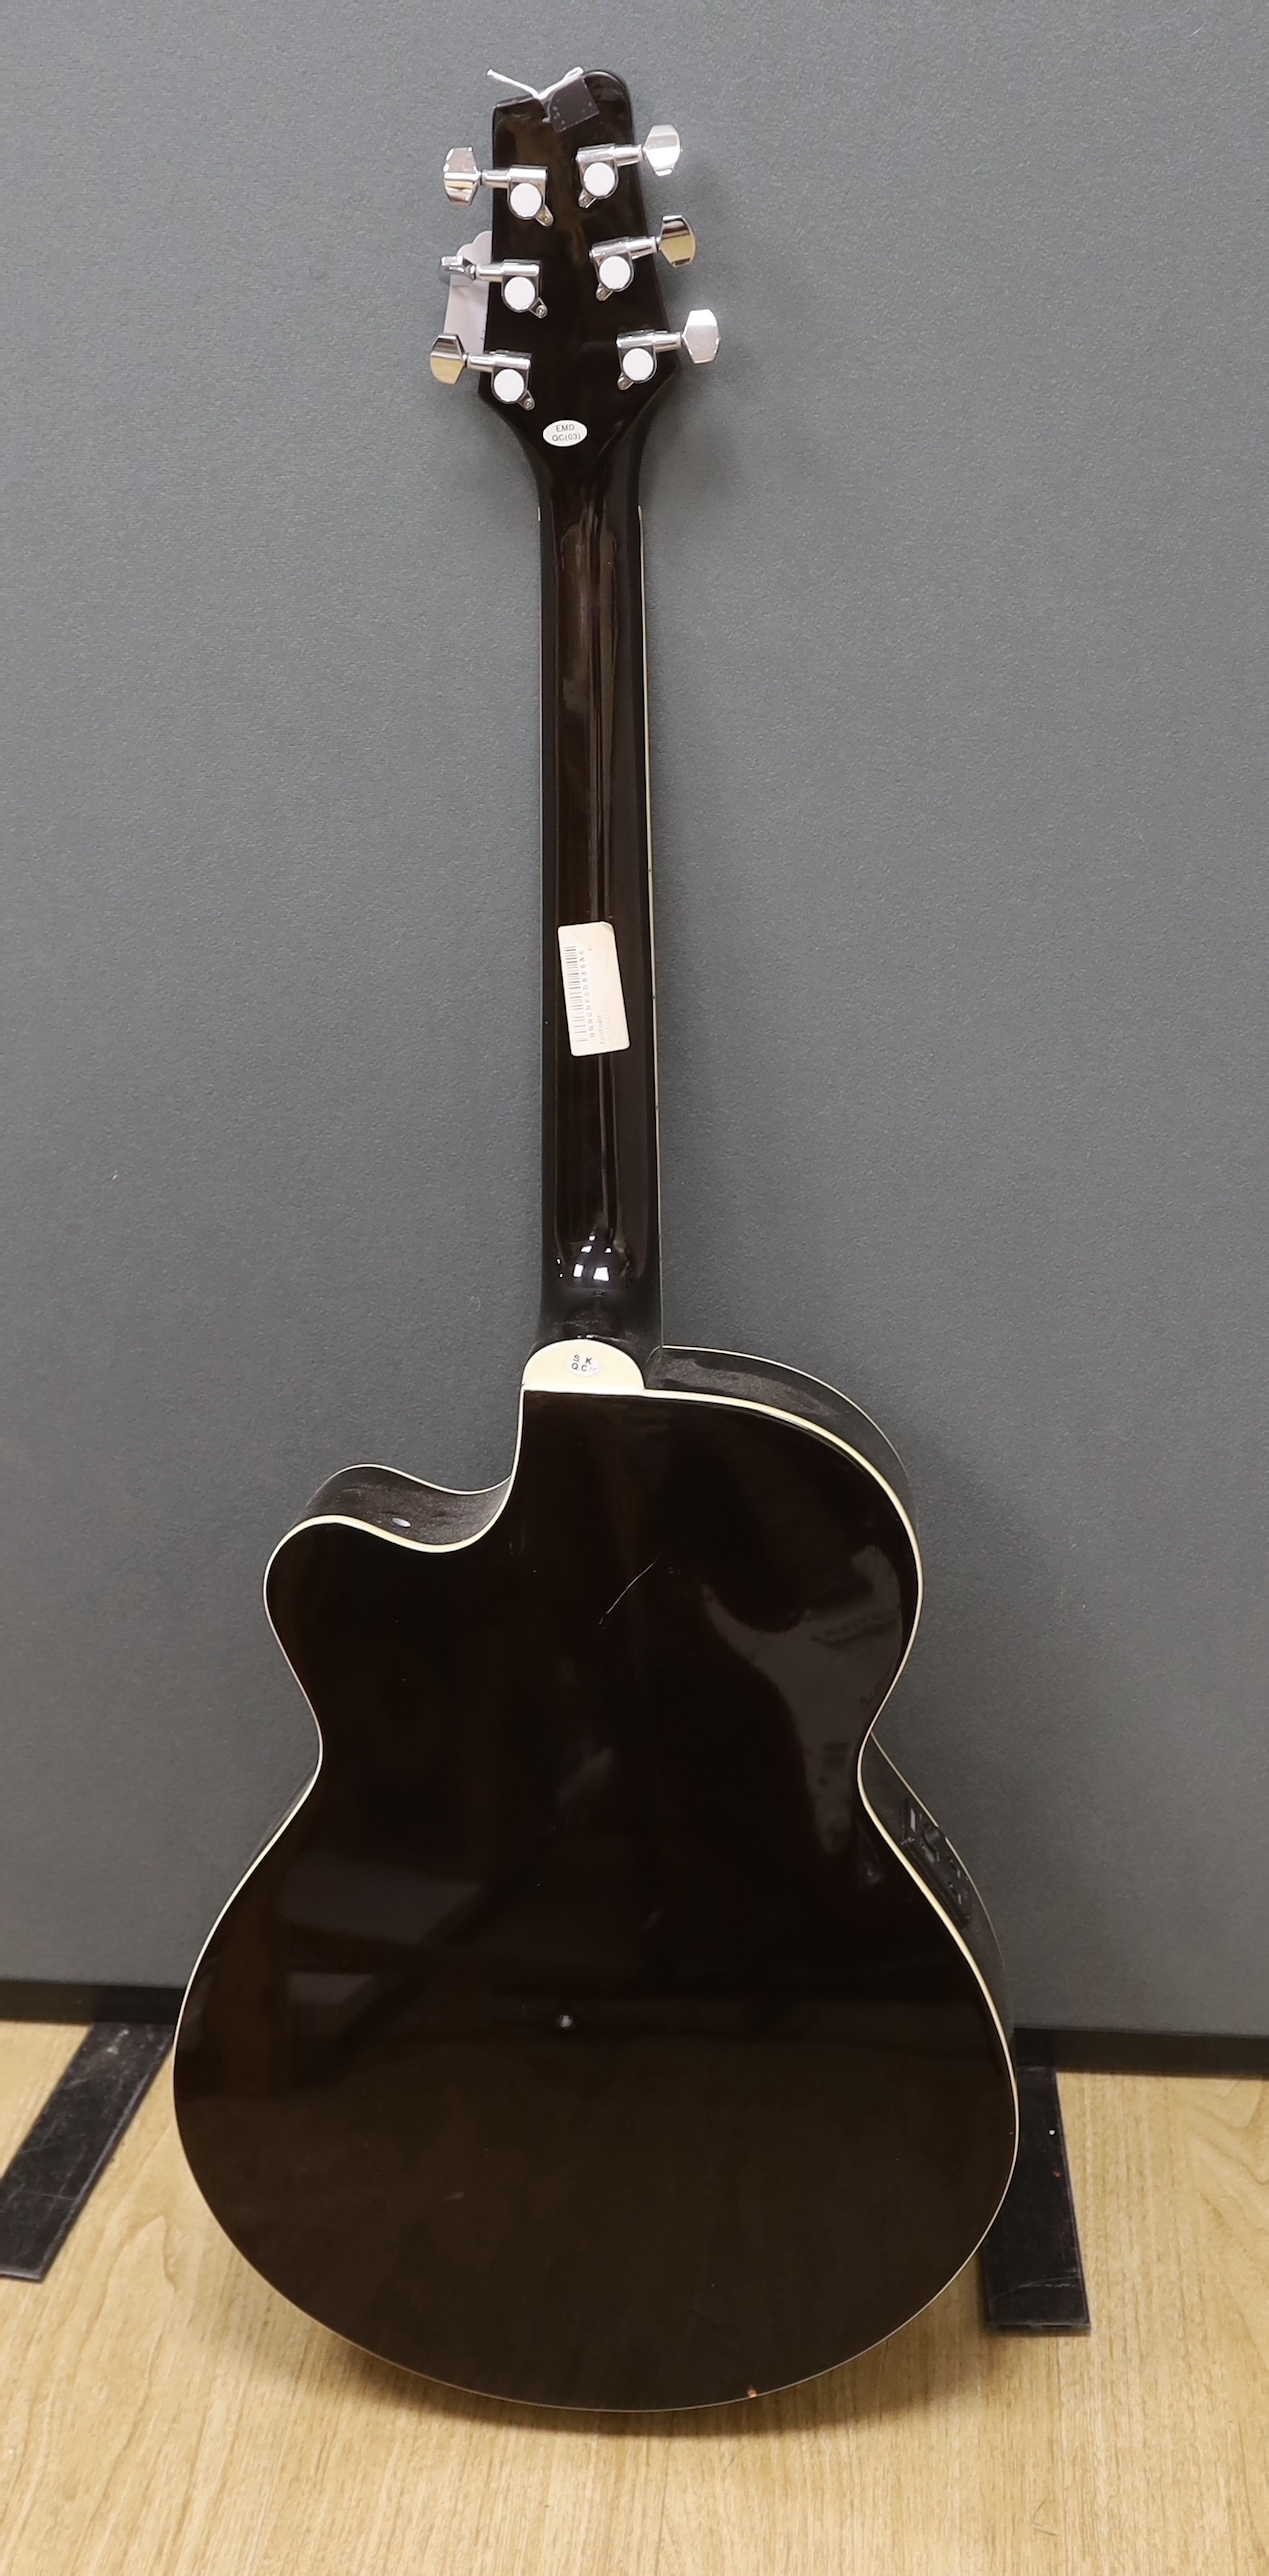 An Eastcoast electro-acoustic guitar, model no.SA40MJCFI-N